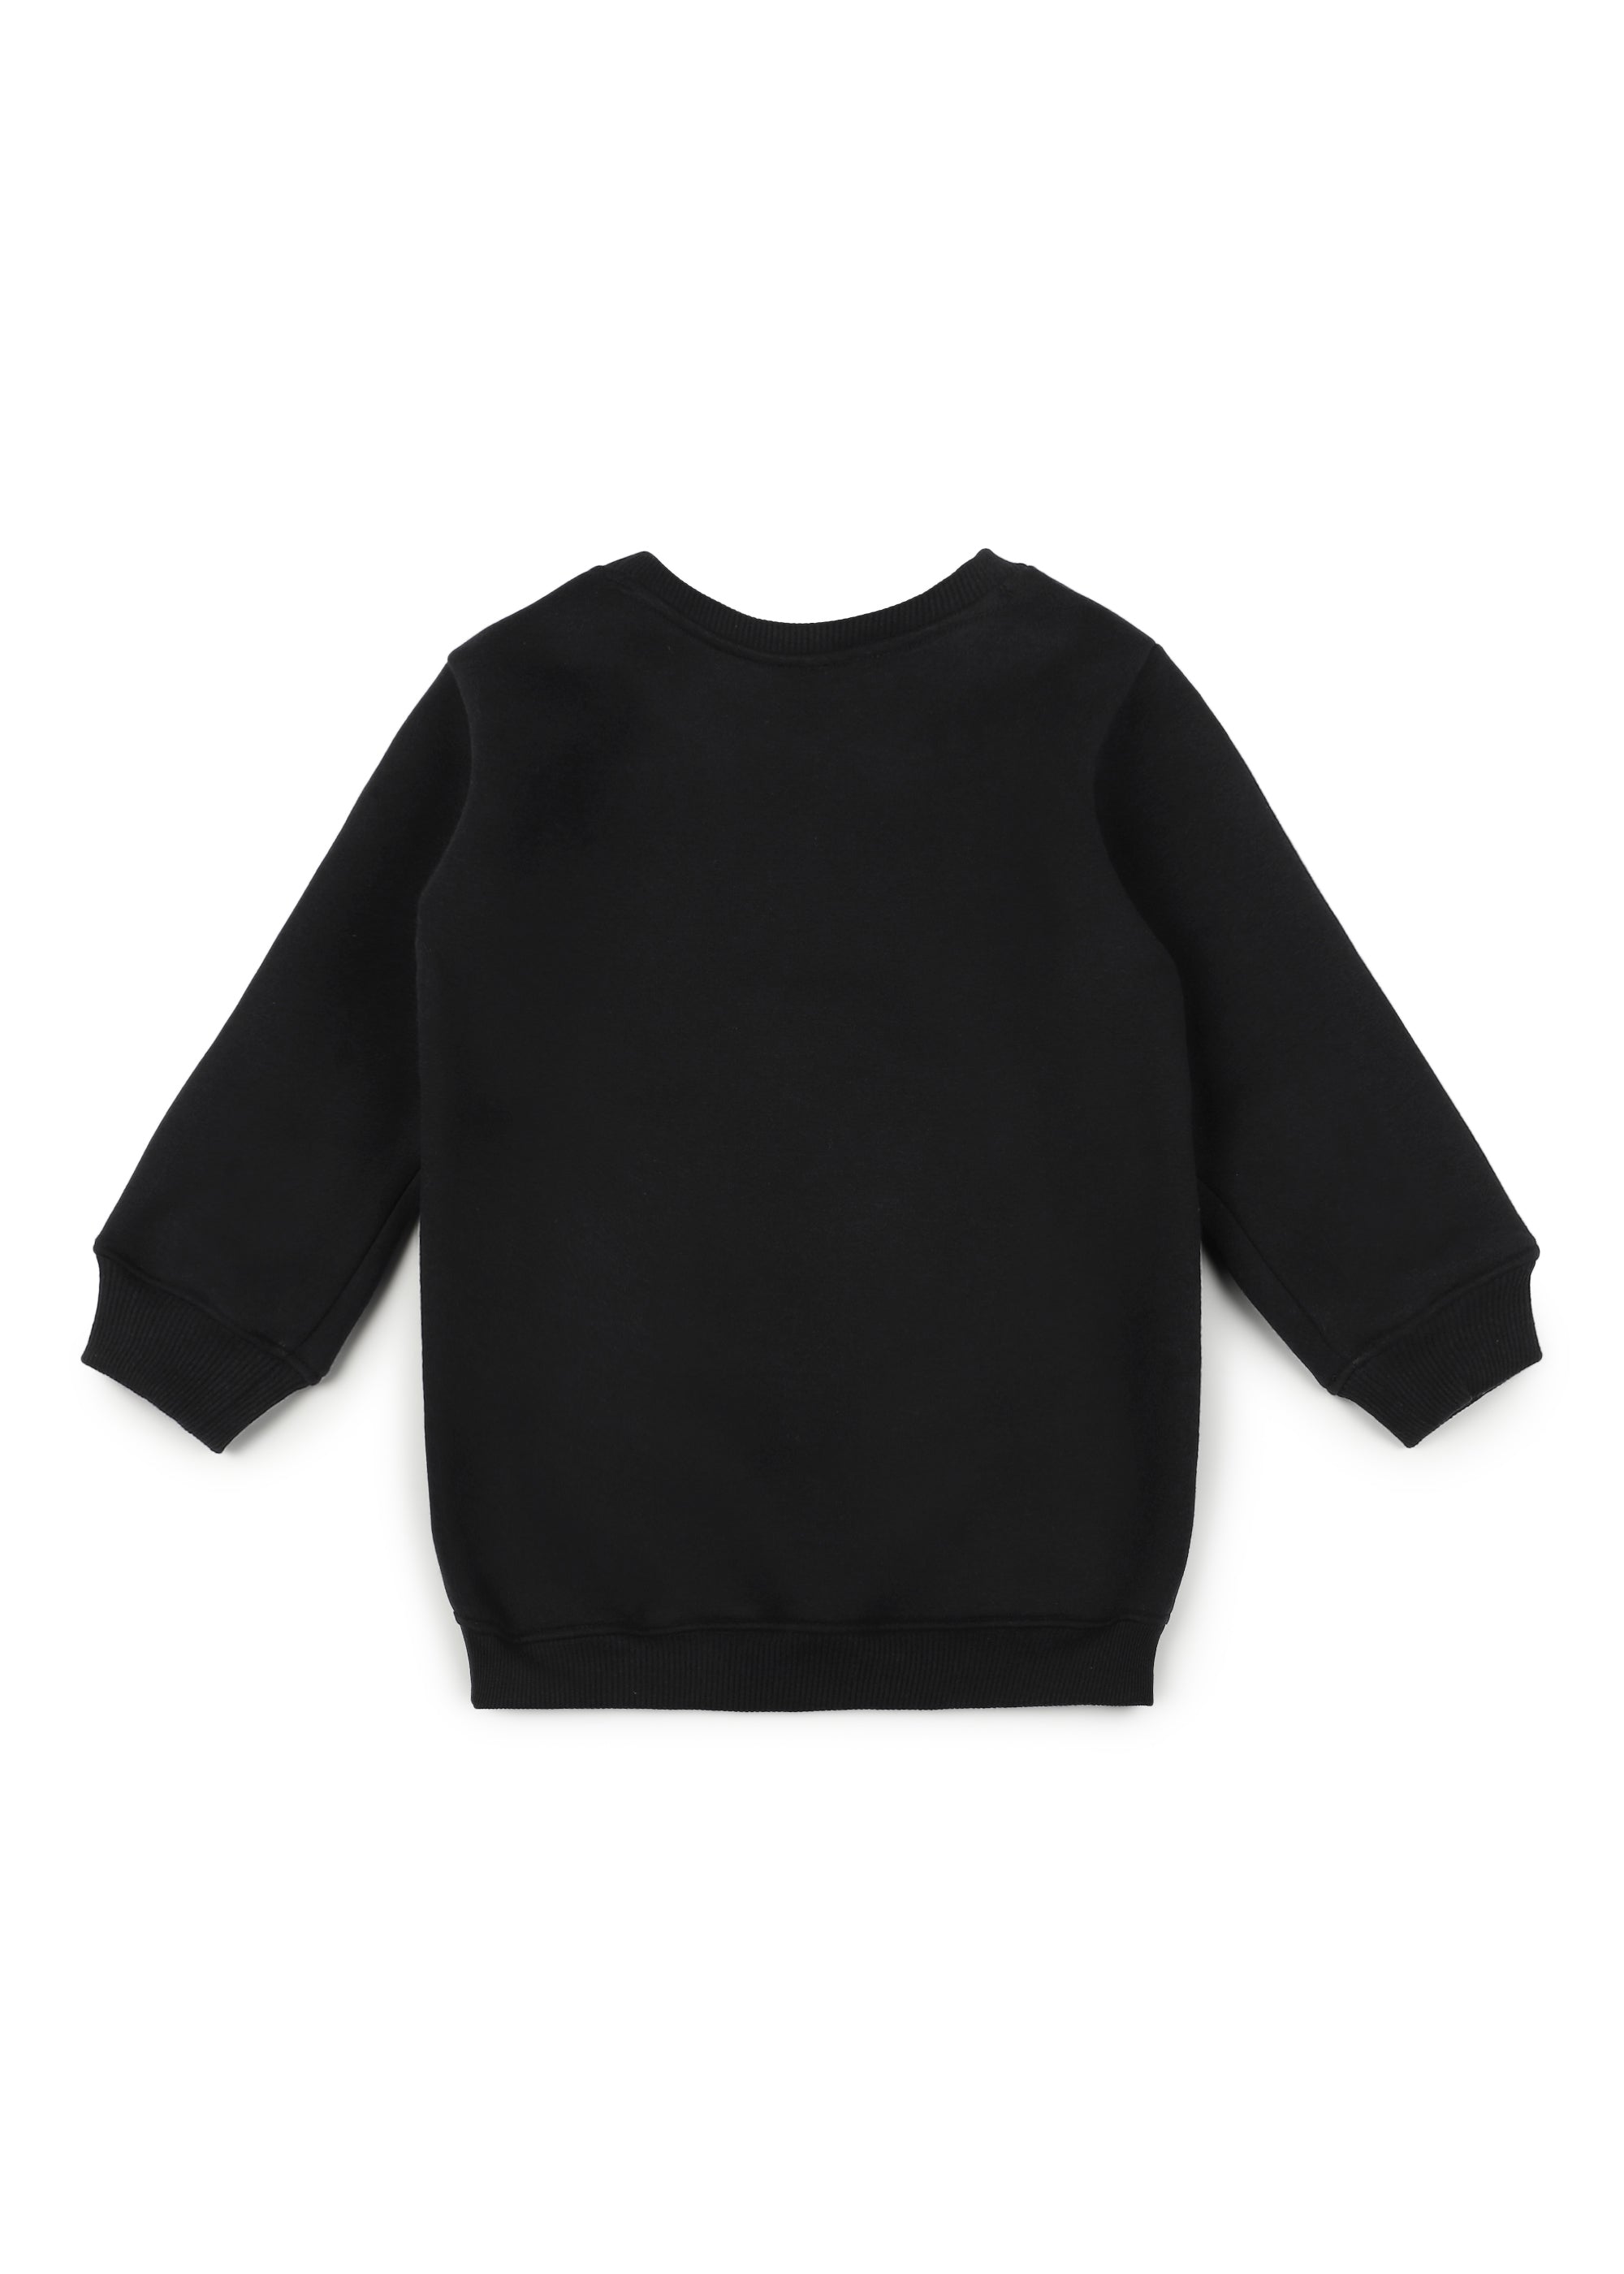 Paw Patrol Heroes Black Print Cotton Fleece Kids Sweatshirt Set - Shopbloom